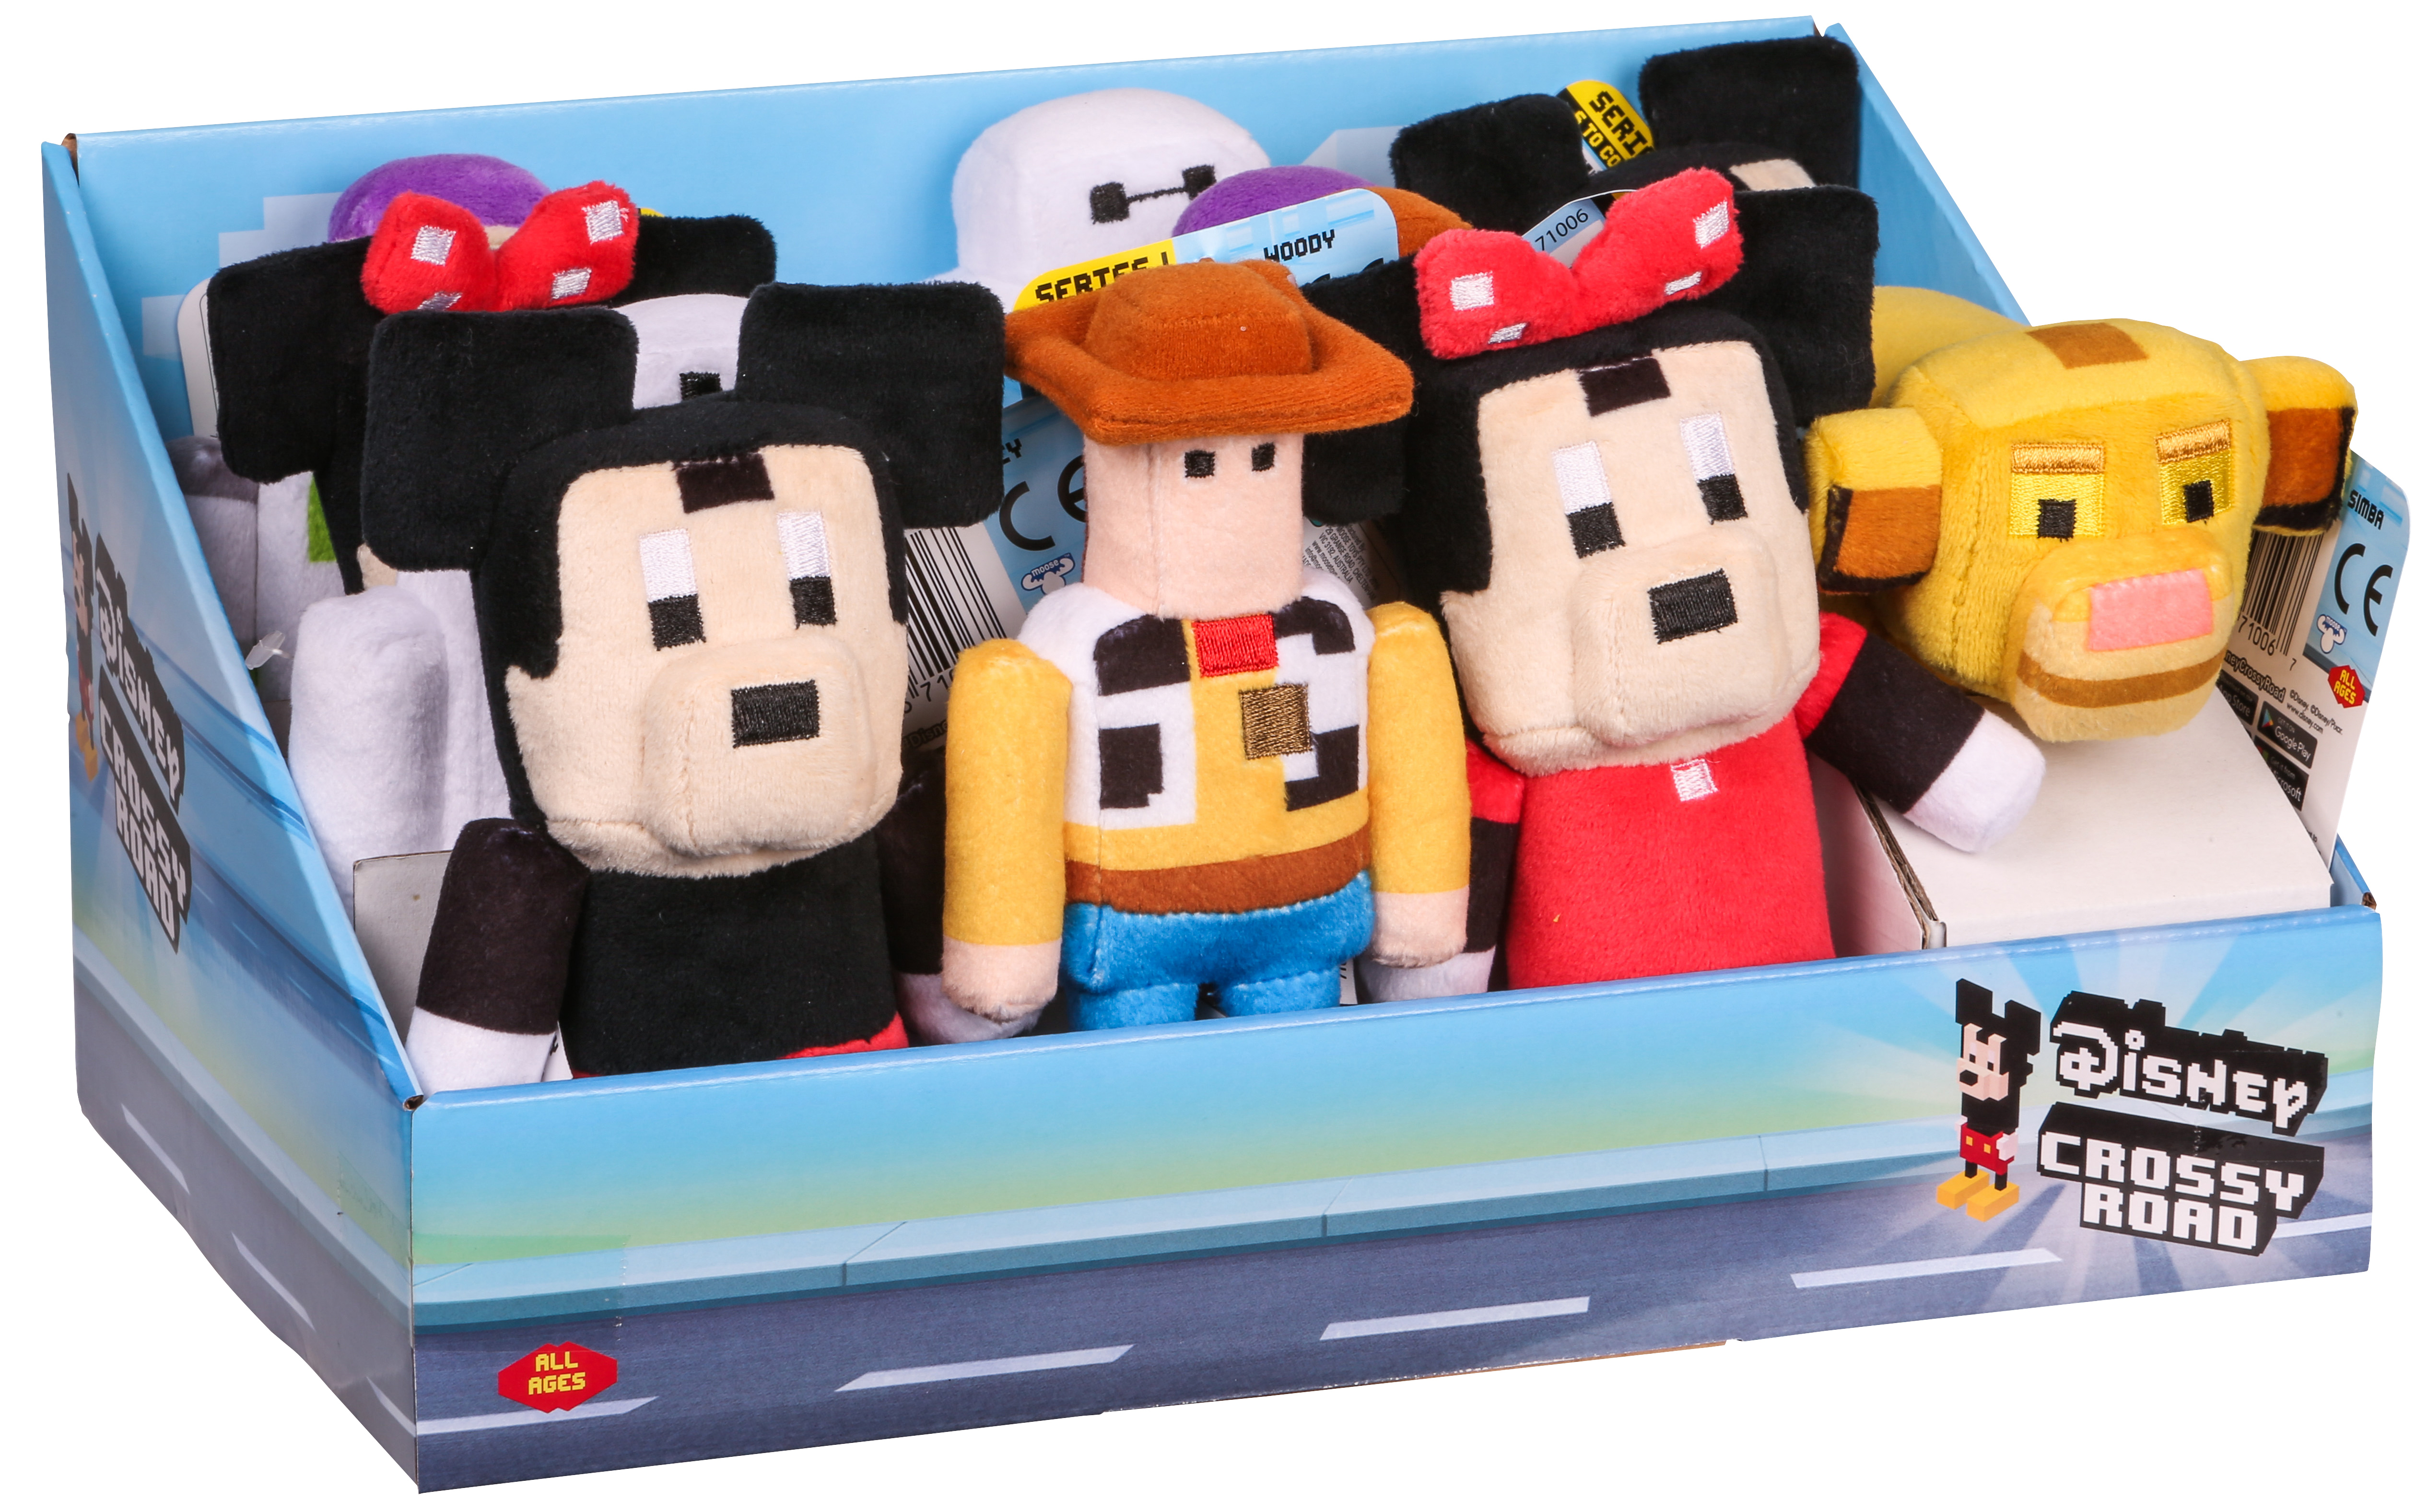 Moose Toys Launches Disney Crossy Road Merchandise